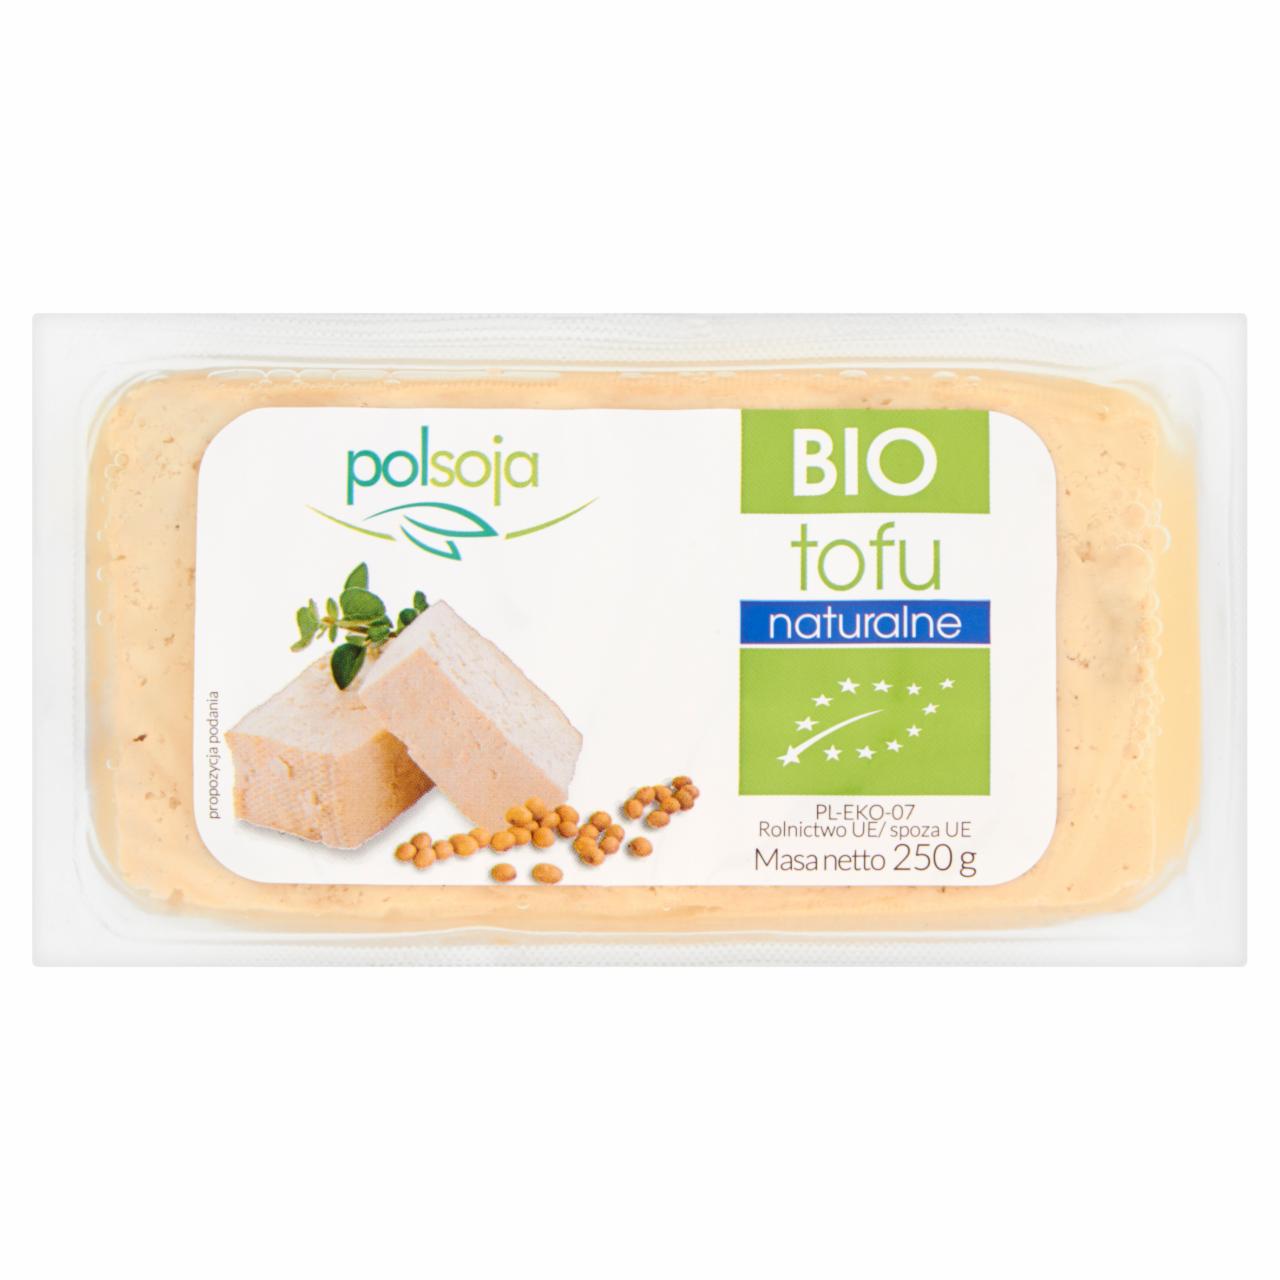 Zdjęcia - Polsoja BIO Tofu naturalne 250 g